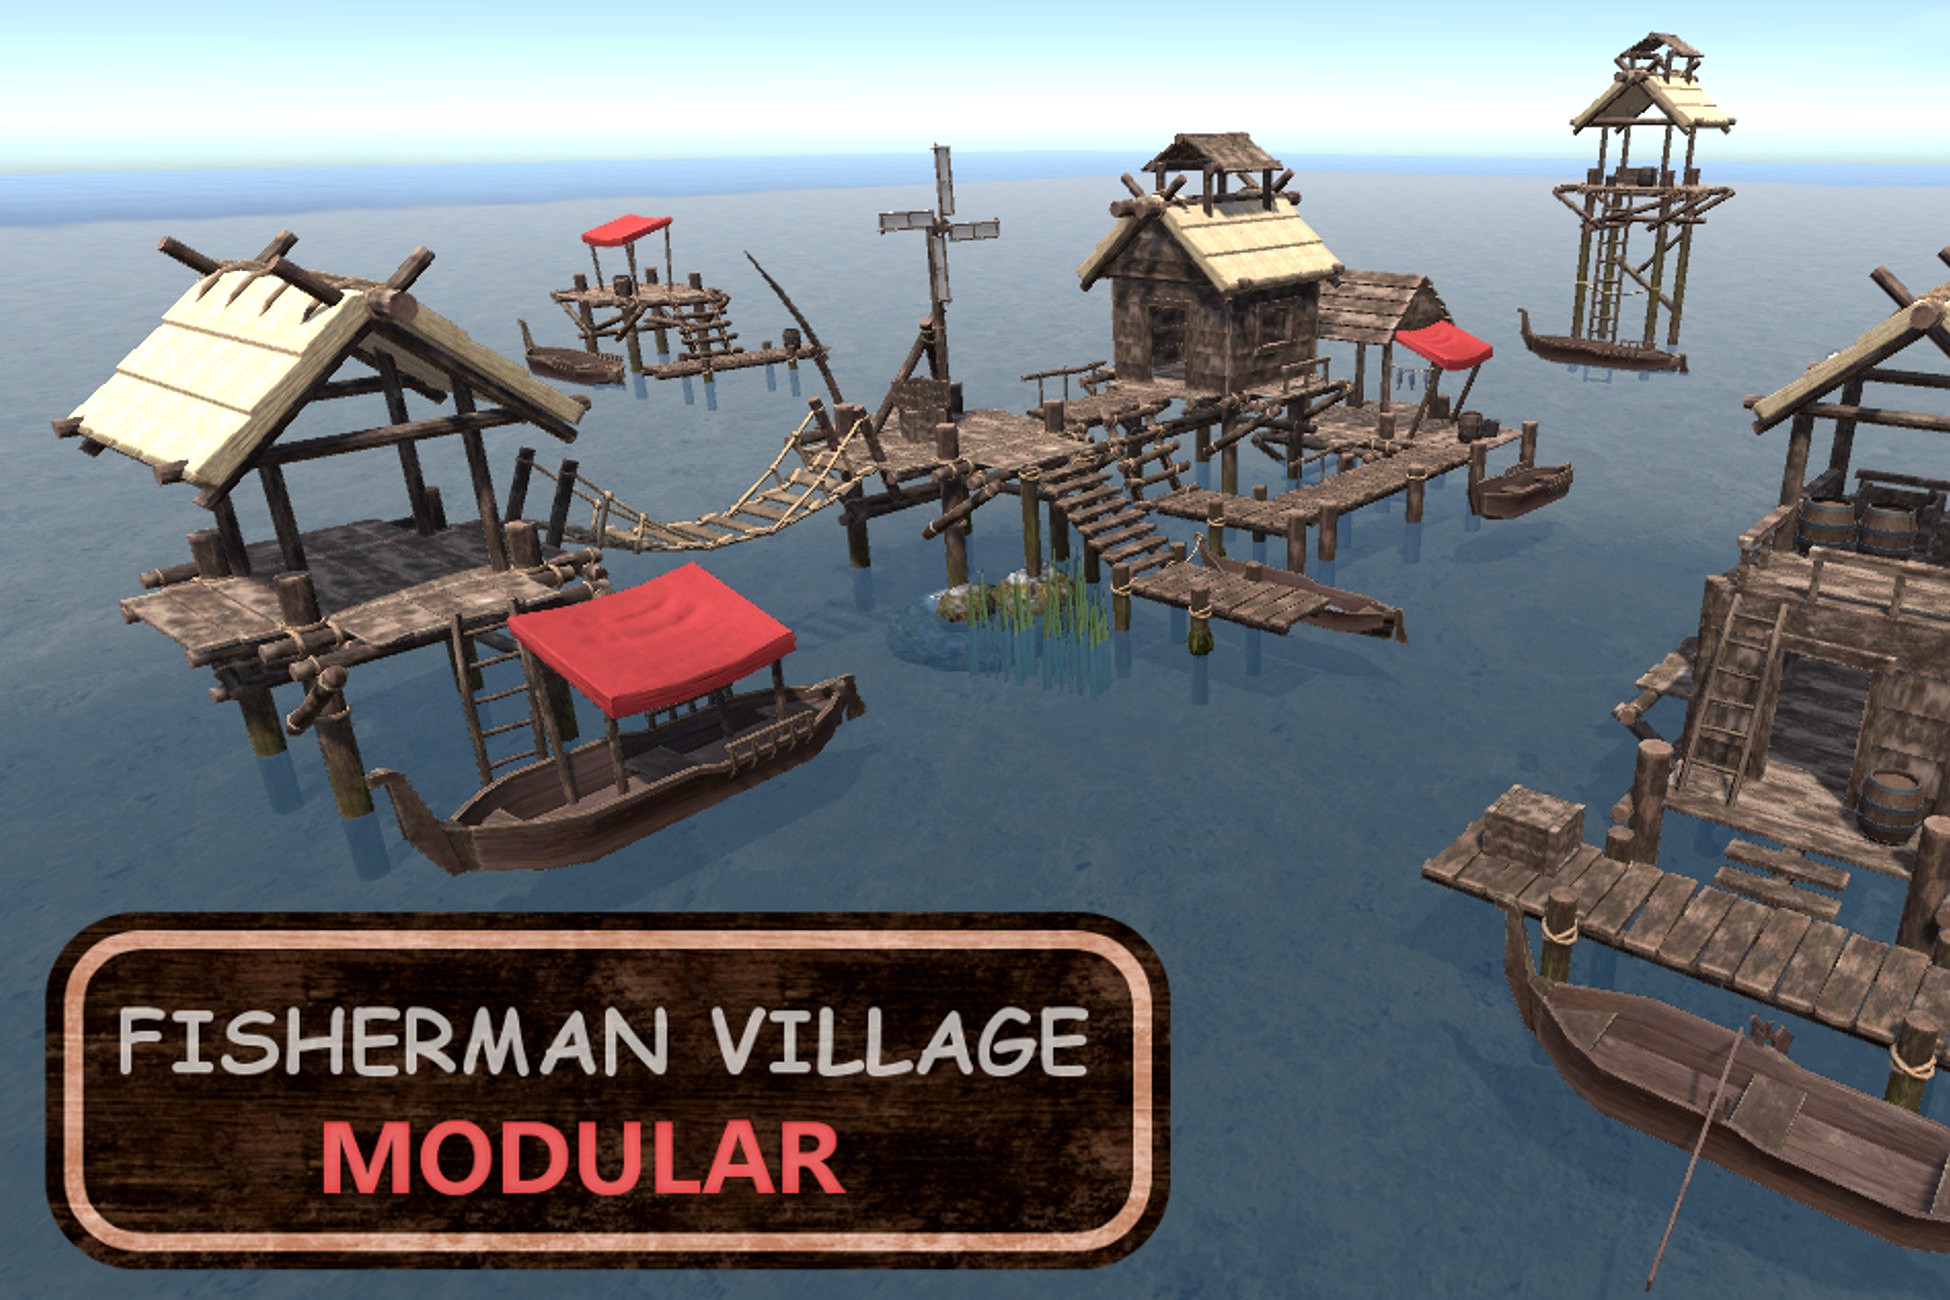 Fisherman Shack Village Modular